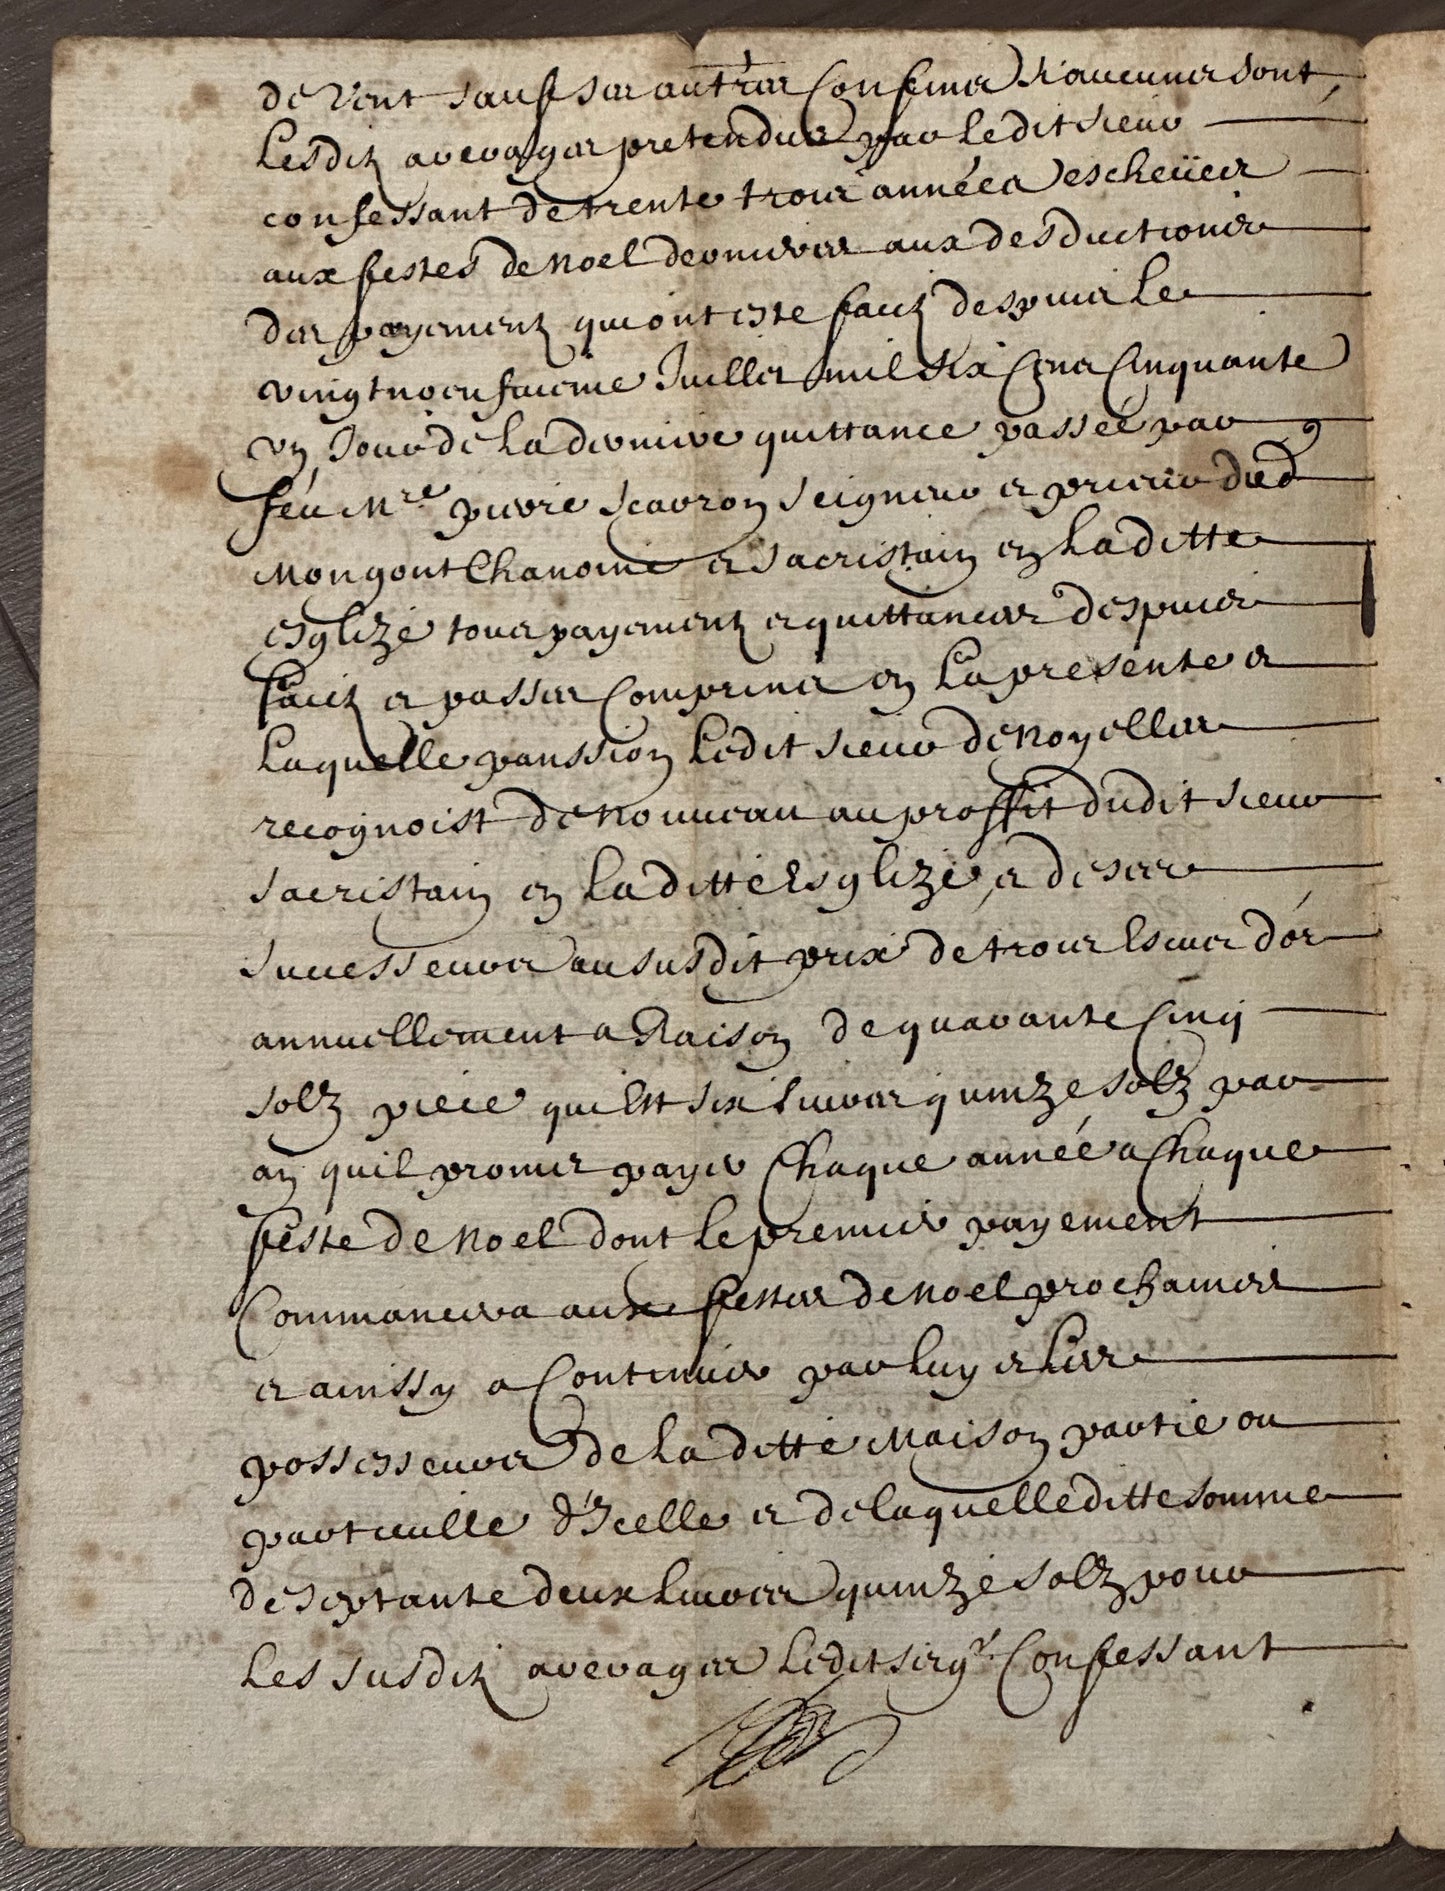 1684 French Manuscript